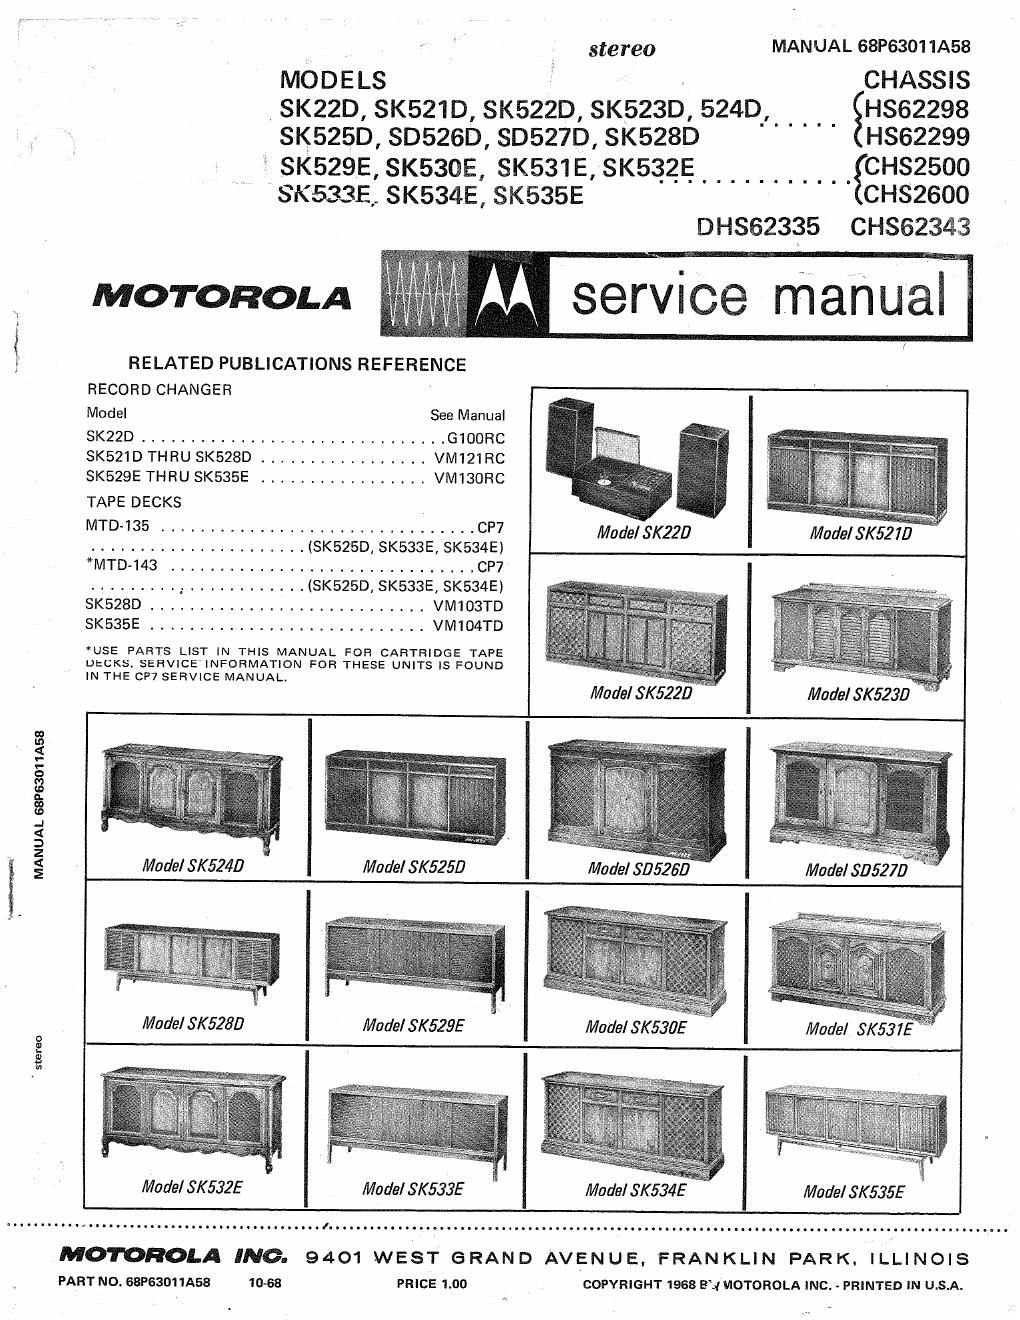 motorola sk 530 e service manual